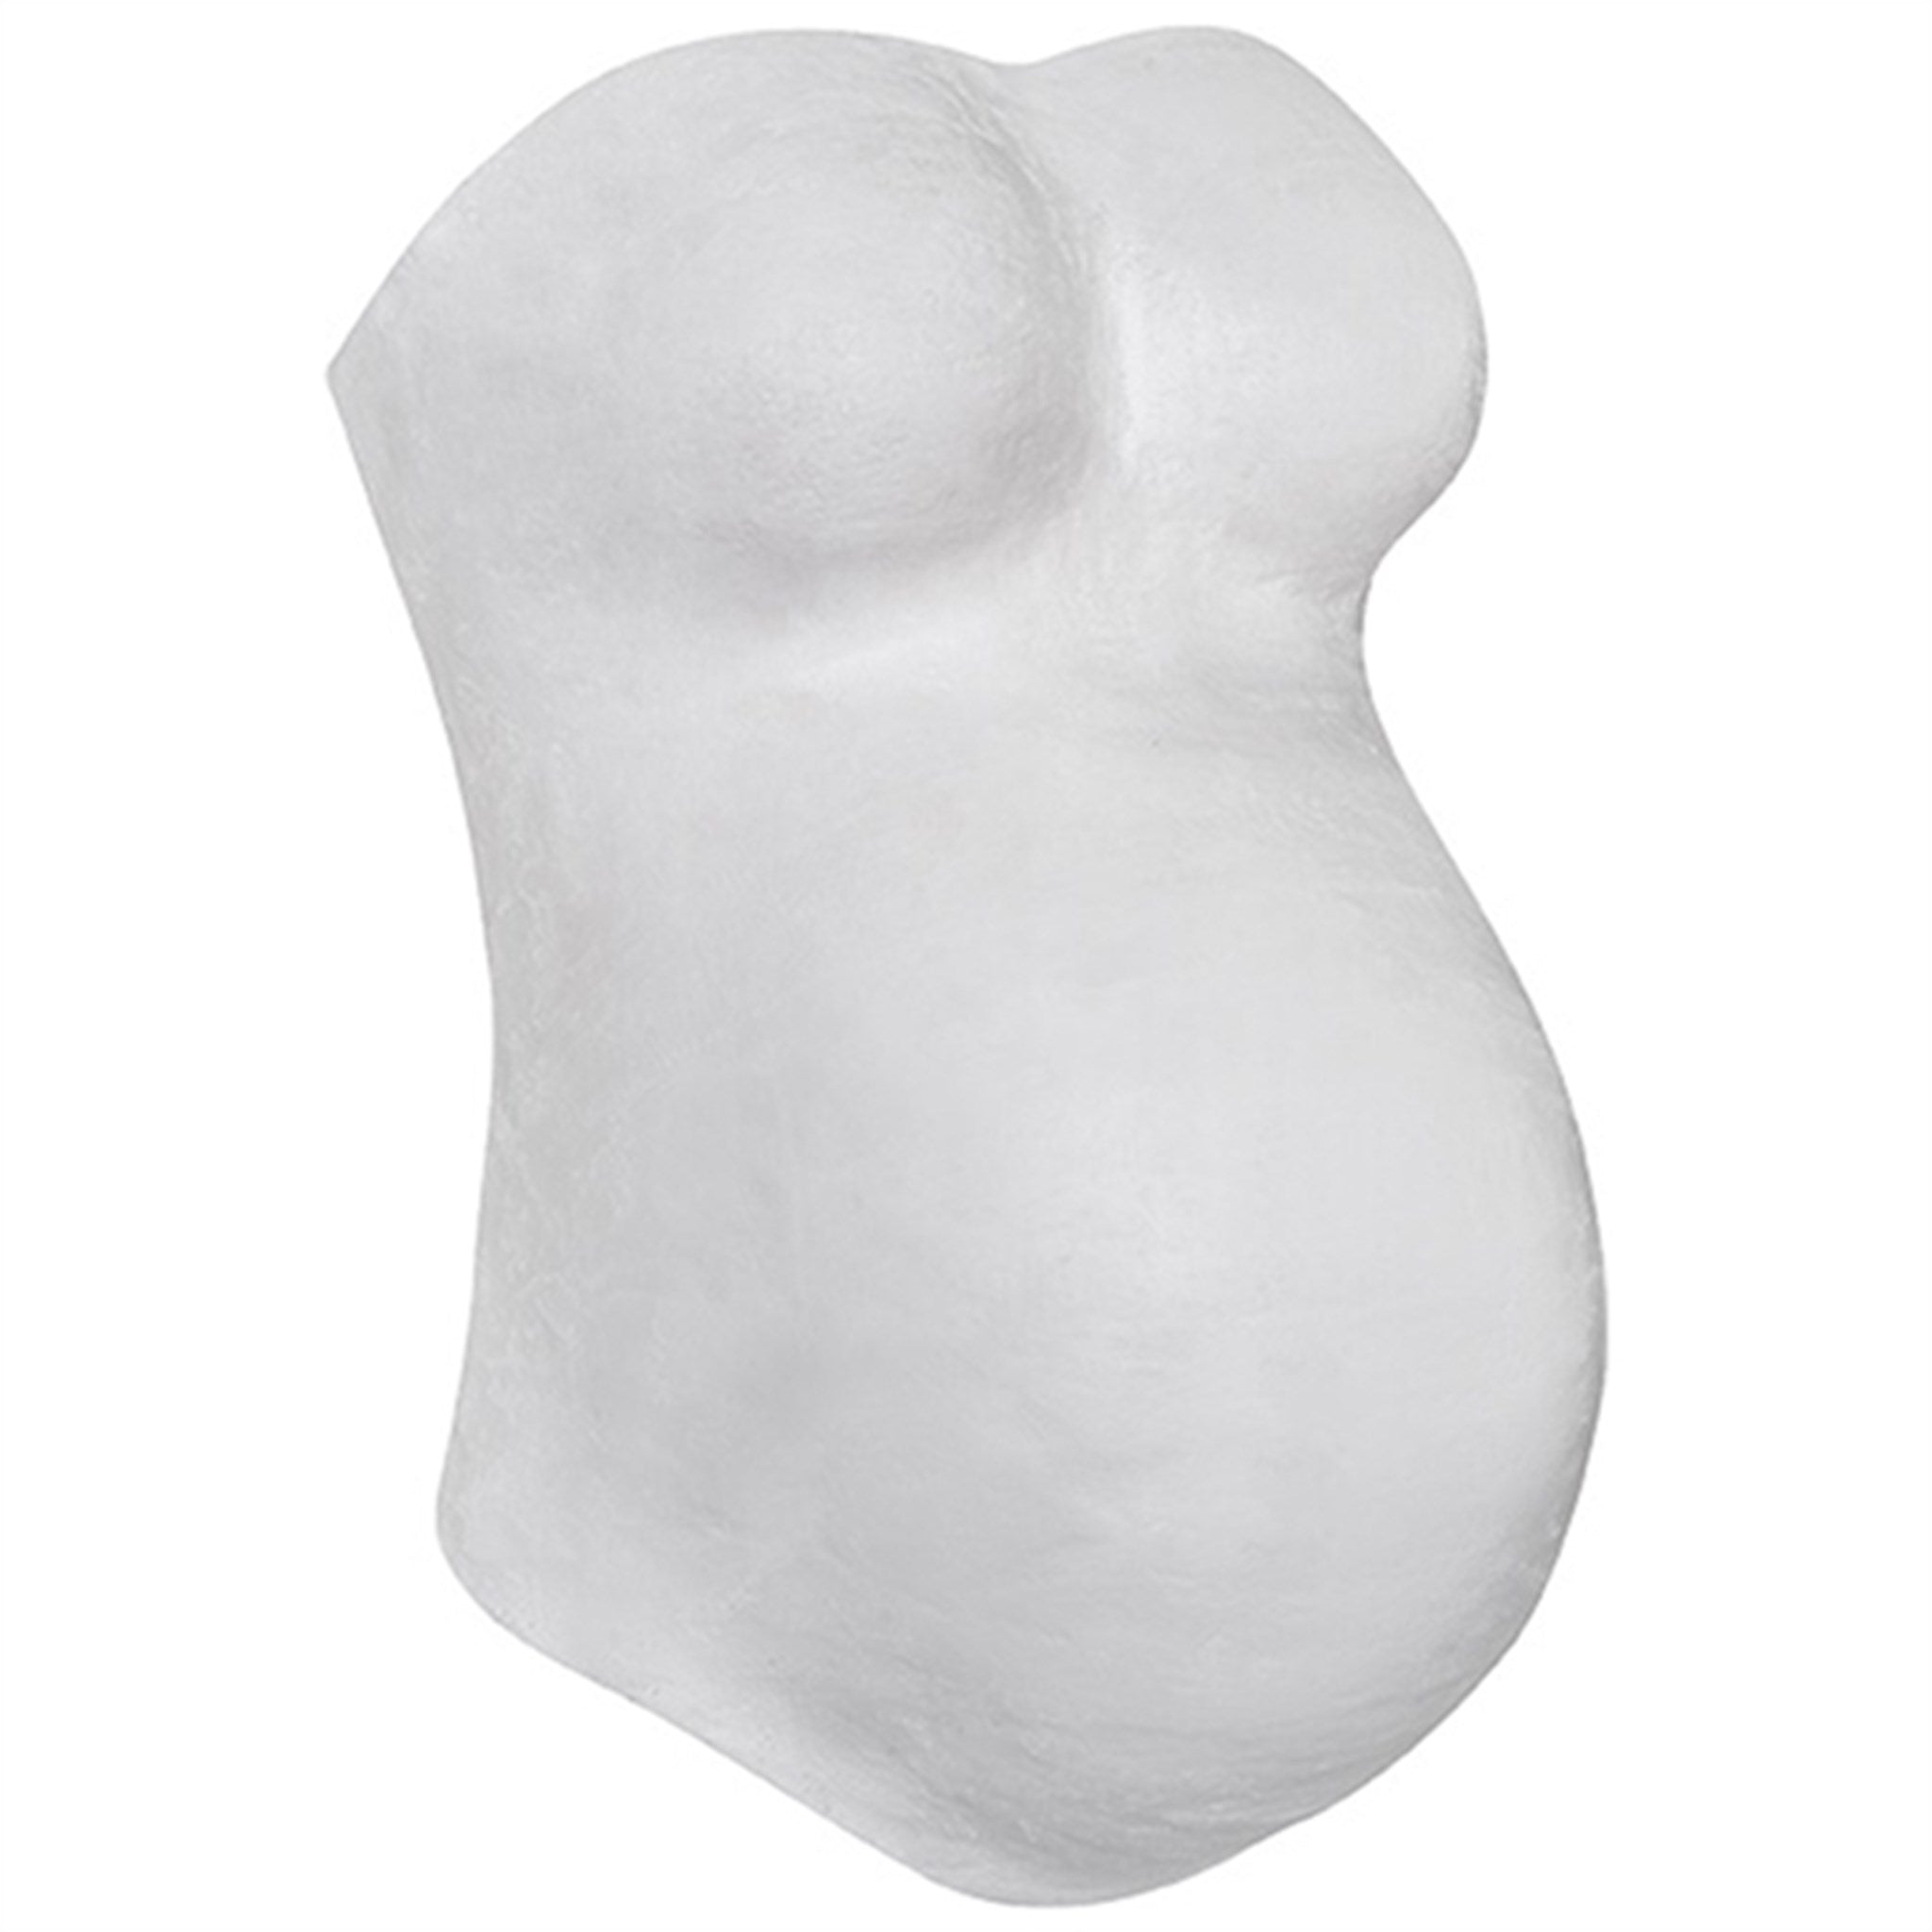 REER Plaster Cast of Pregnant Belly